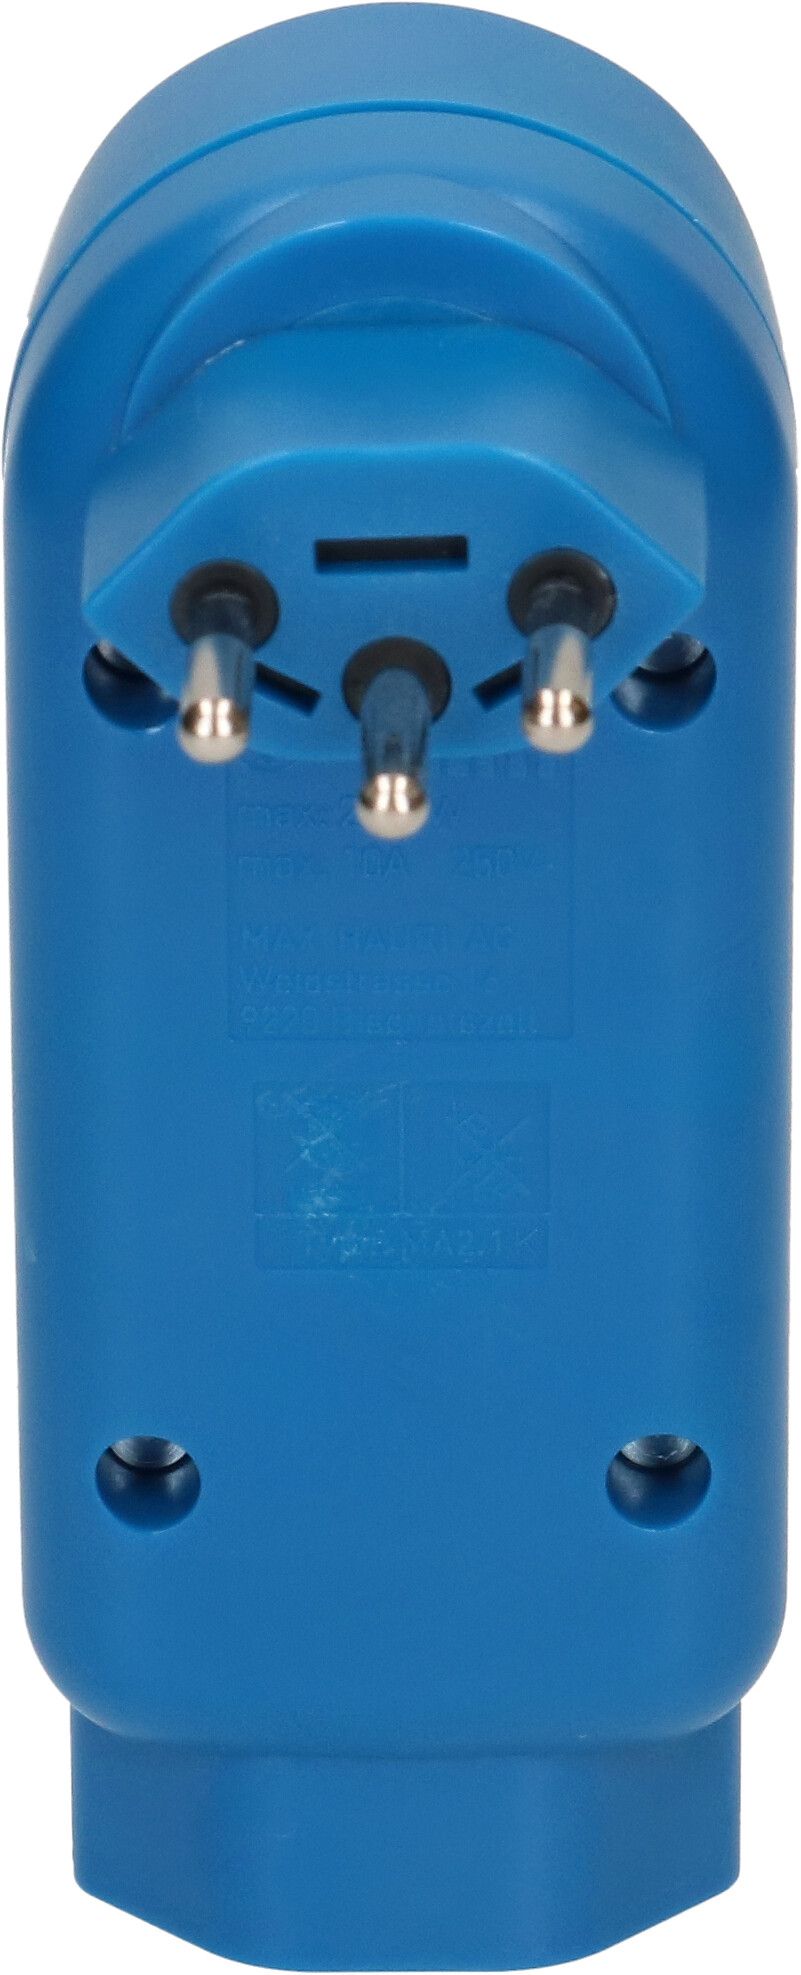 Abzweigstecker maxADAPTturn 2+1x Typ 13 blau drehbar BS